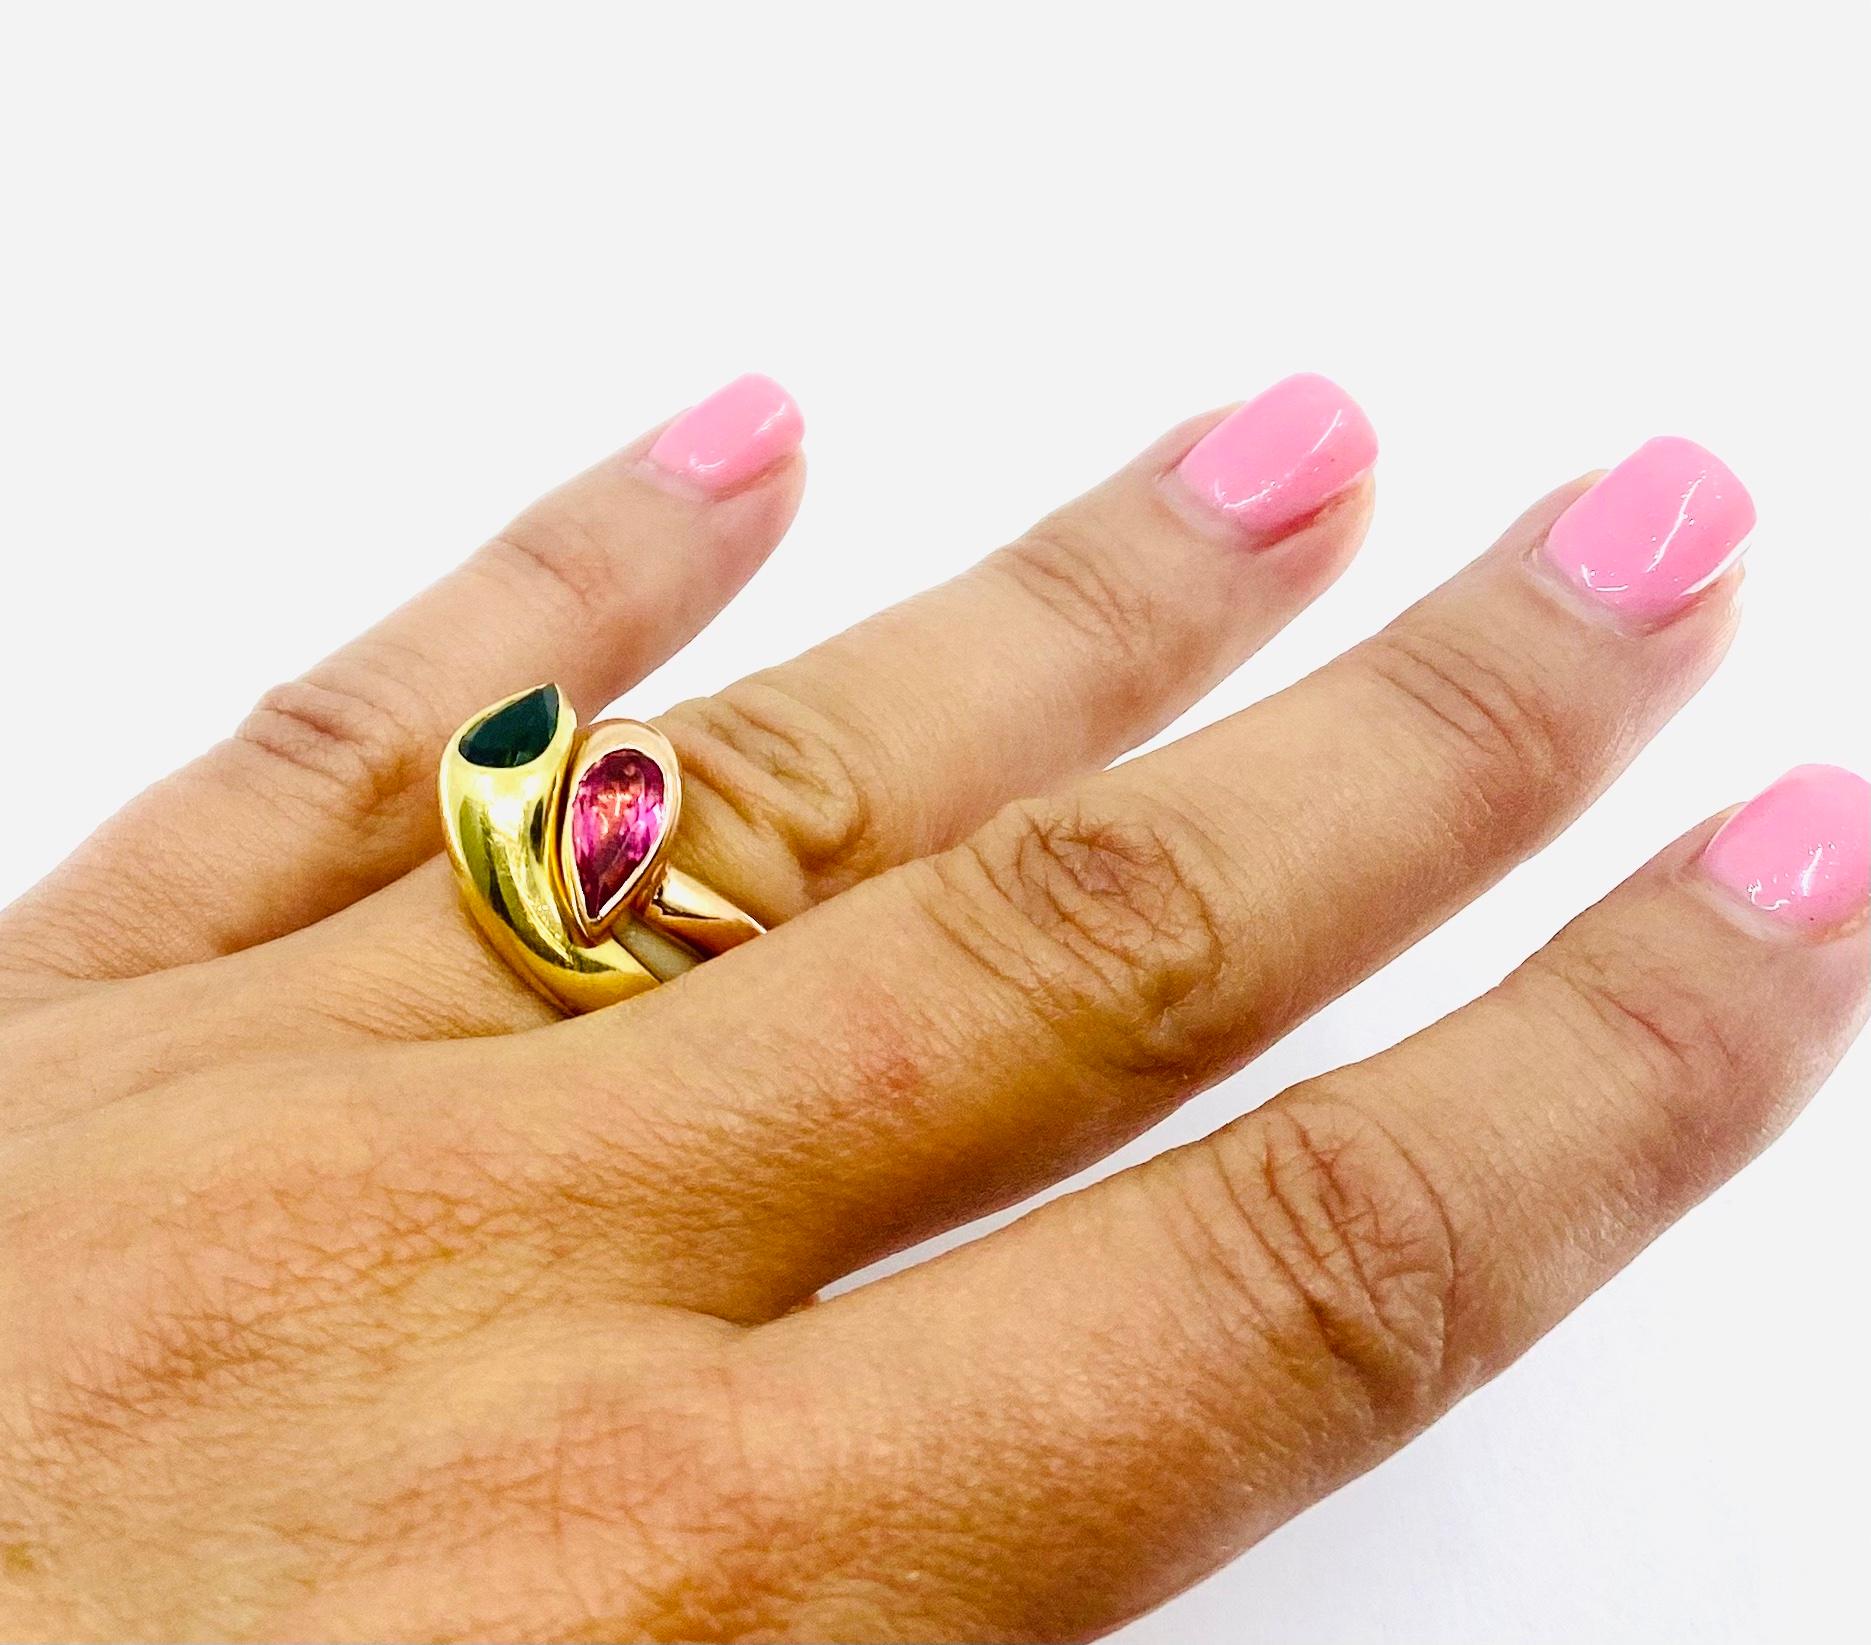 DESIGNER: Bulgari
CIRCA: 1980’s
MATERIALS: 18K Yellow & Pink Gold
GEMSTONE: Pink Tourmaline
GEMSTONE 2: Green Tourmaline
WEIGHT: 17.3 grams
RING SIZE: 6.5 & 6.75
HALLMARKS: BVLGARI, 750

A pair of Bulgari rings made of 18k yellow and pink gold,